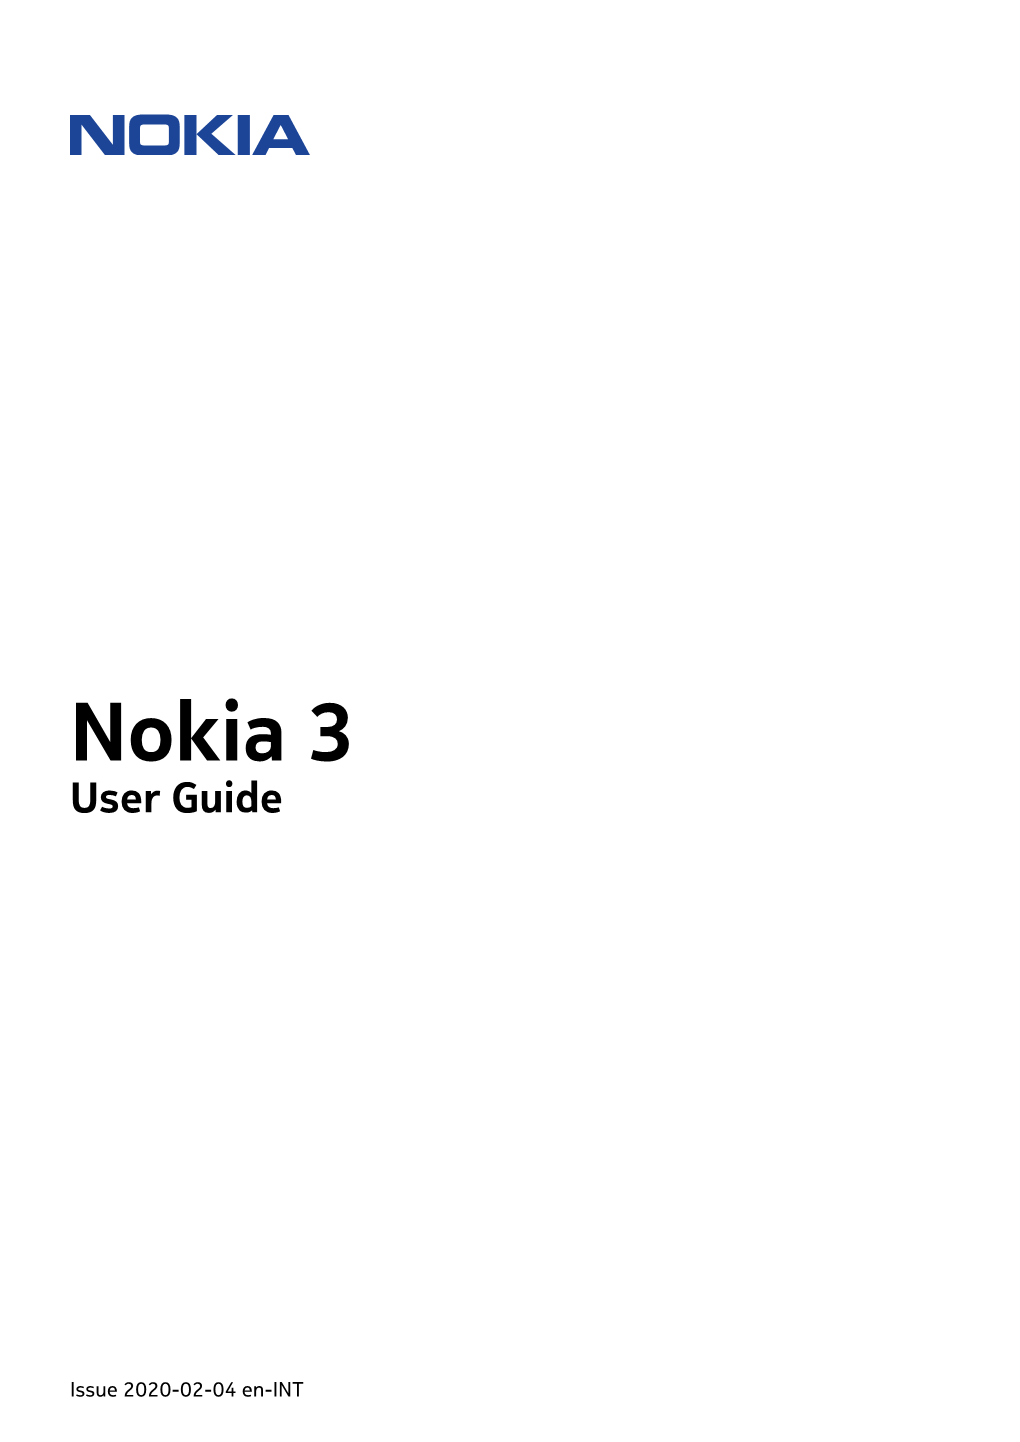 Nokia 3 User Guide